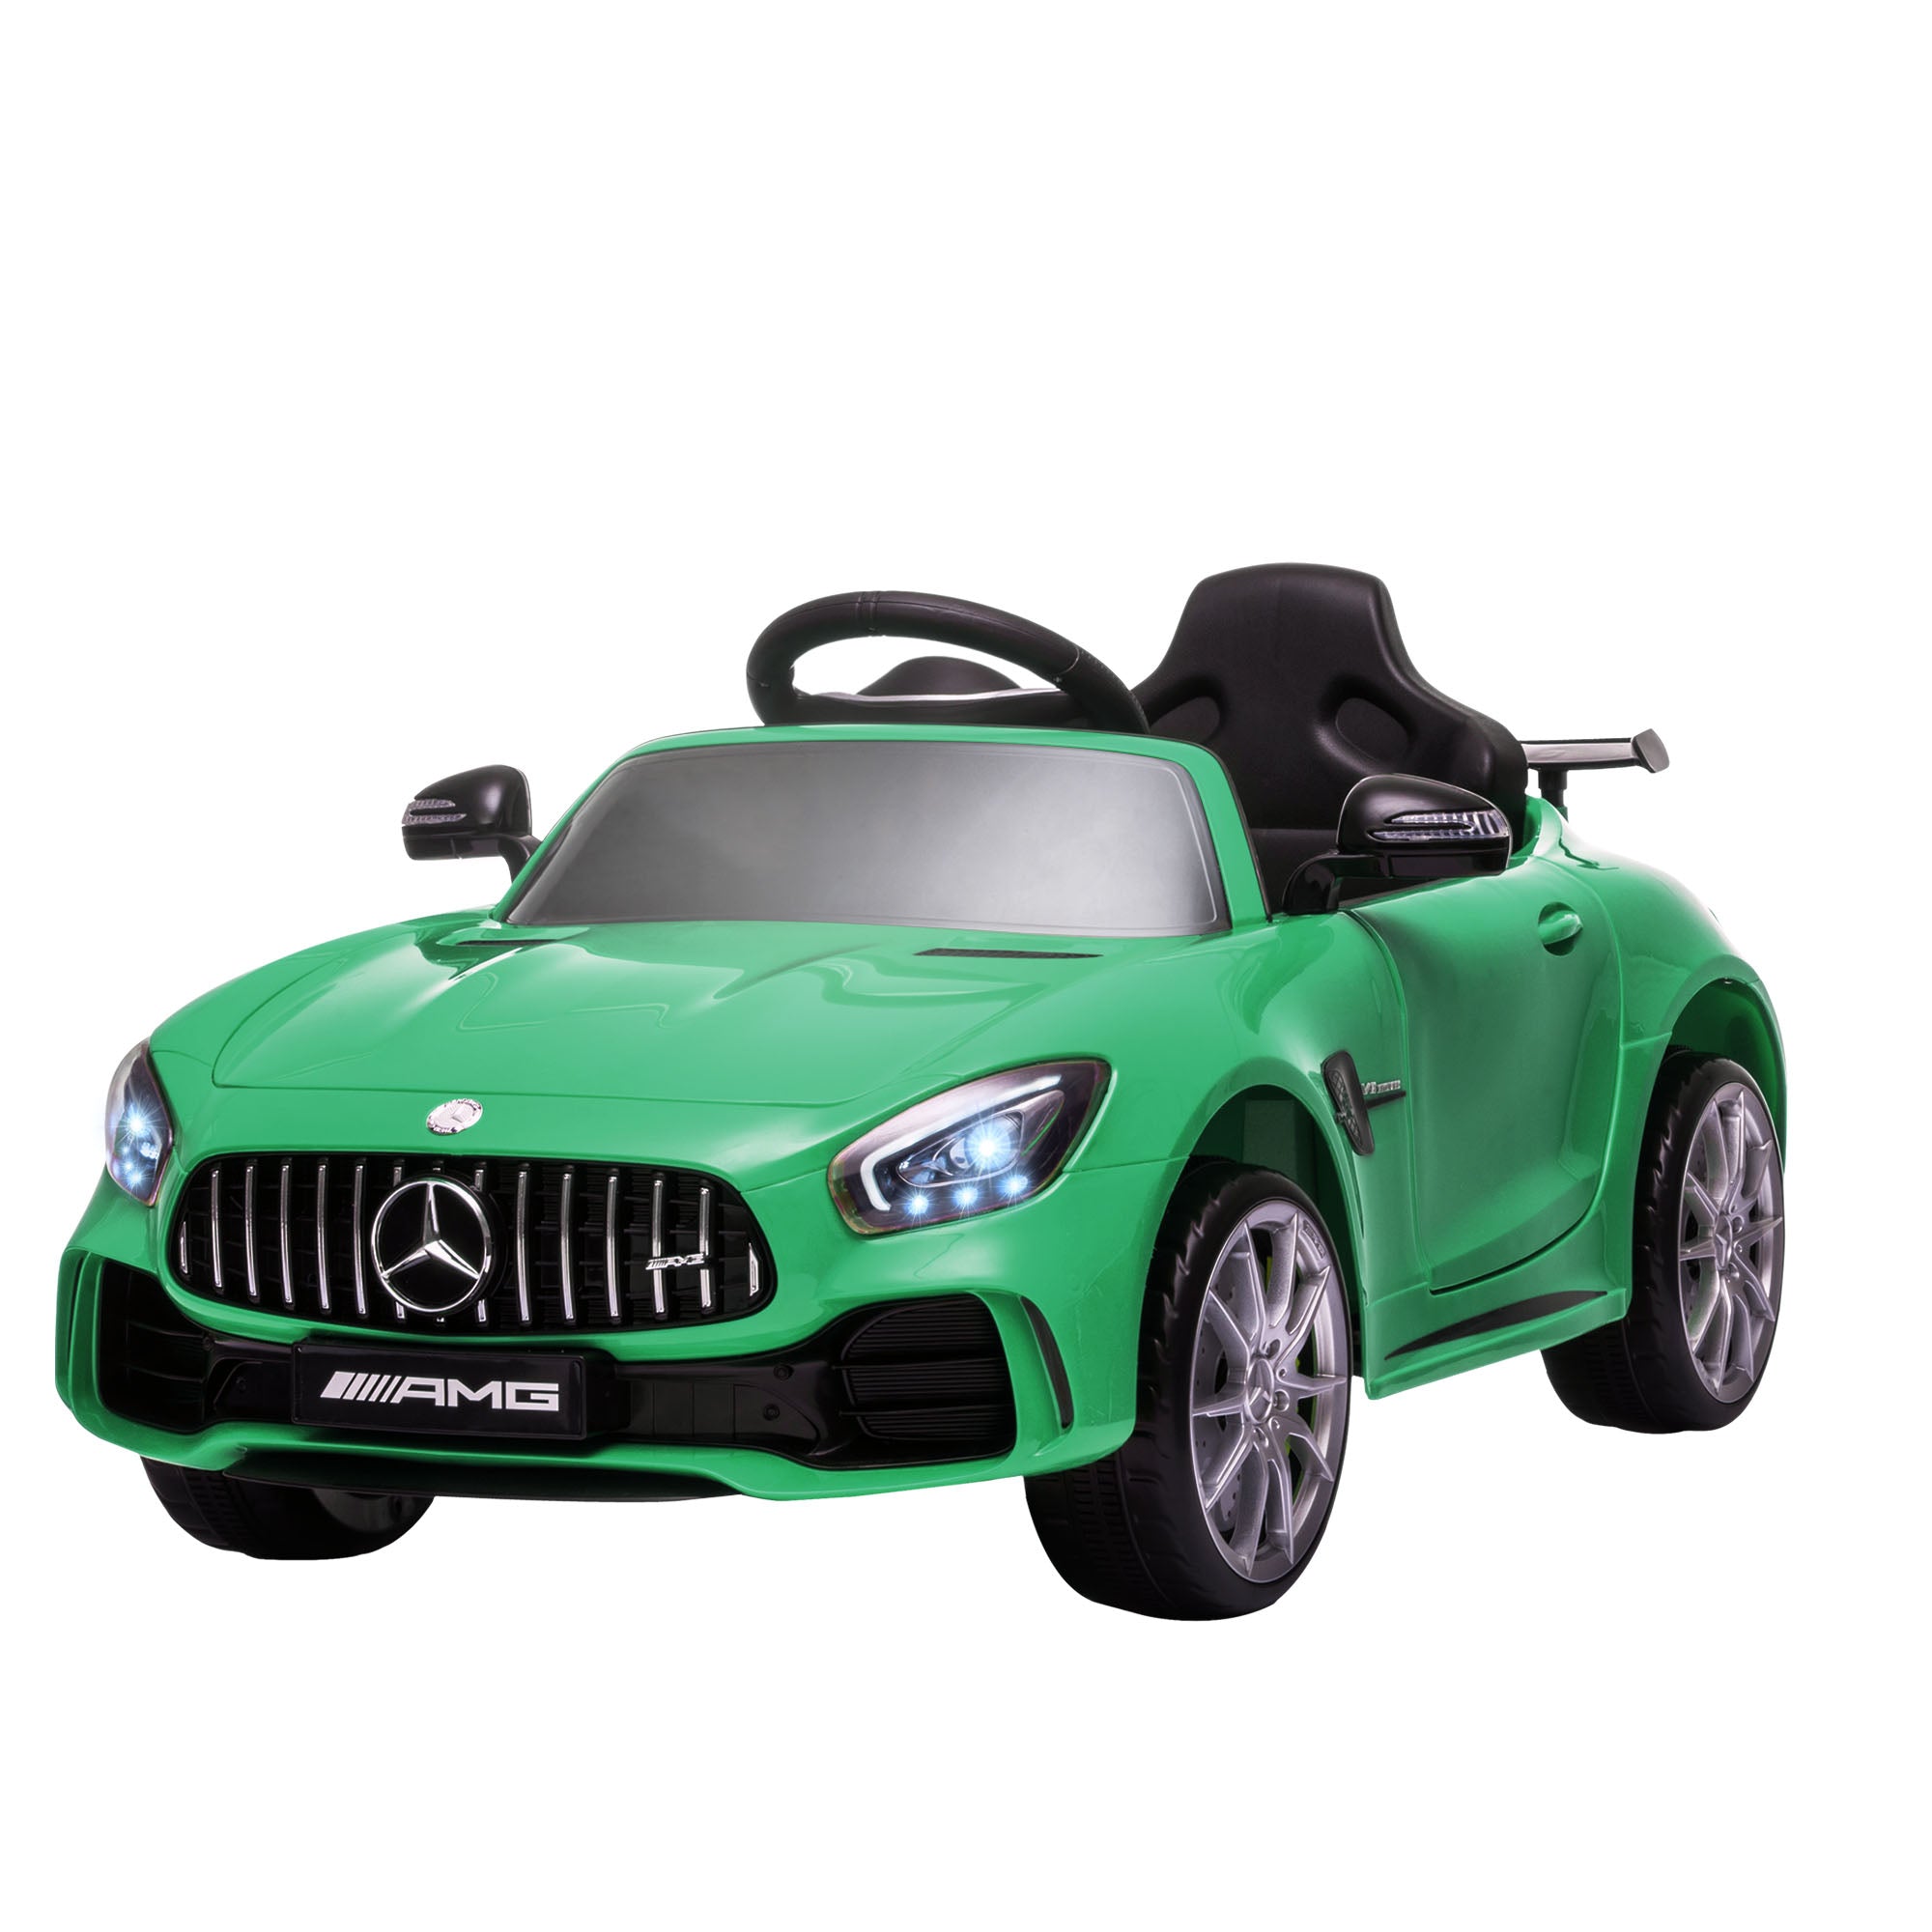 HOMCOM Mercedes-Benz GTR 12V Kids Electric Ride-On Car with Remote Control (Green)